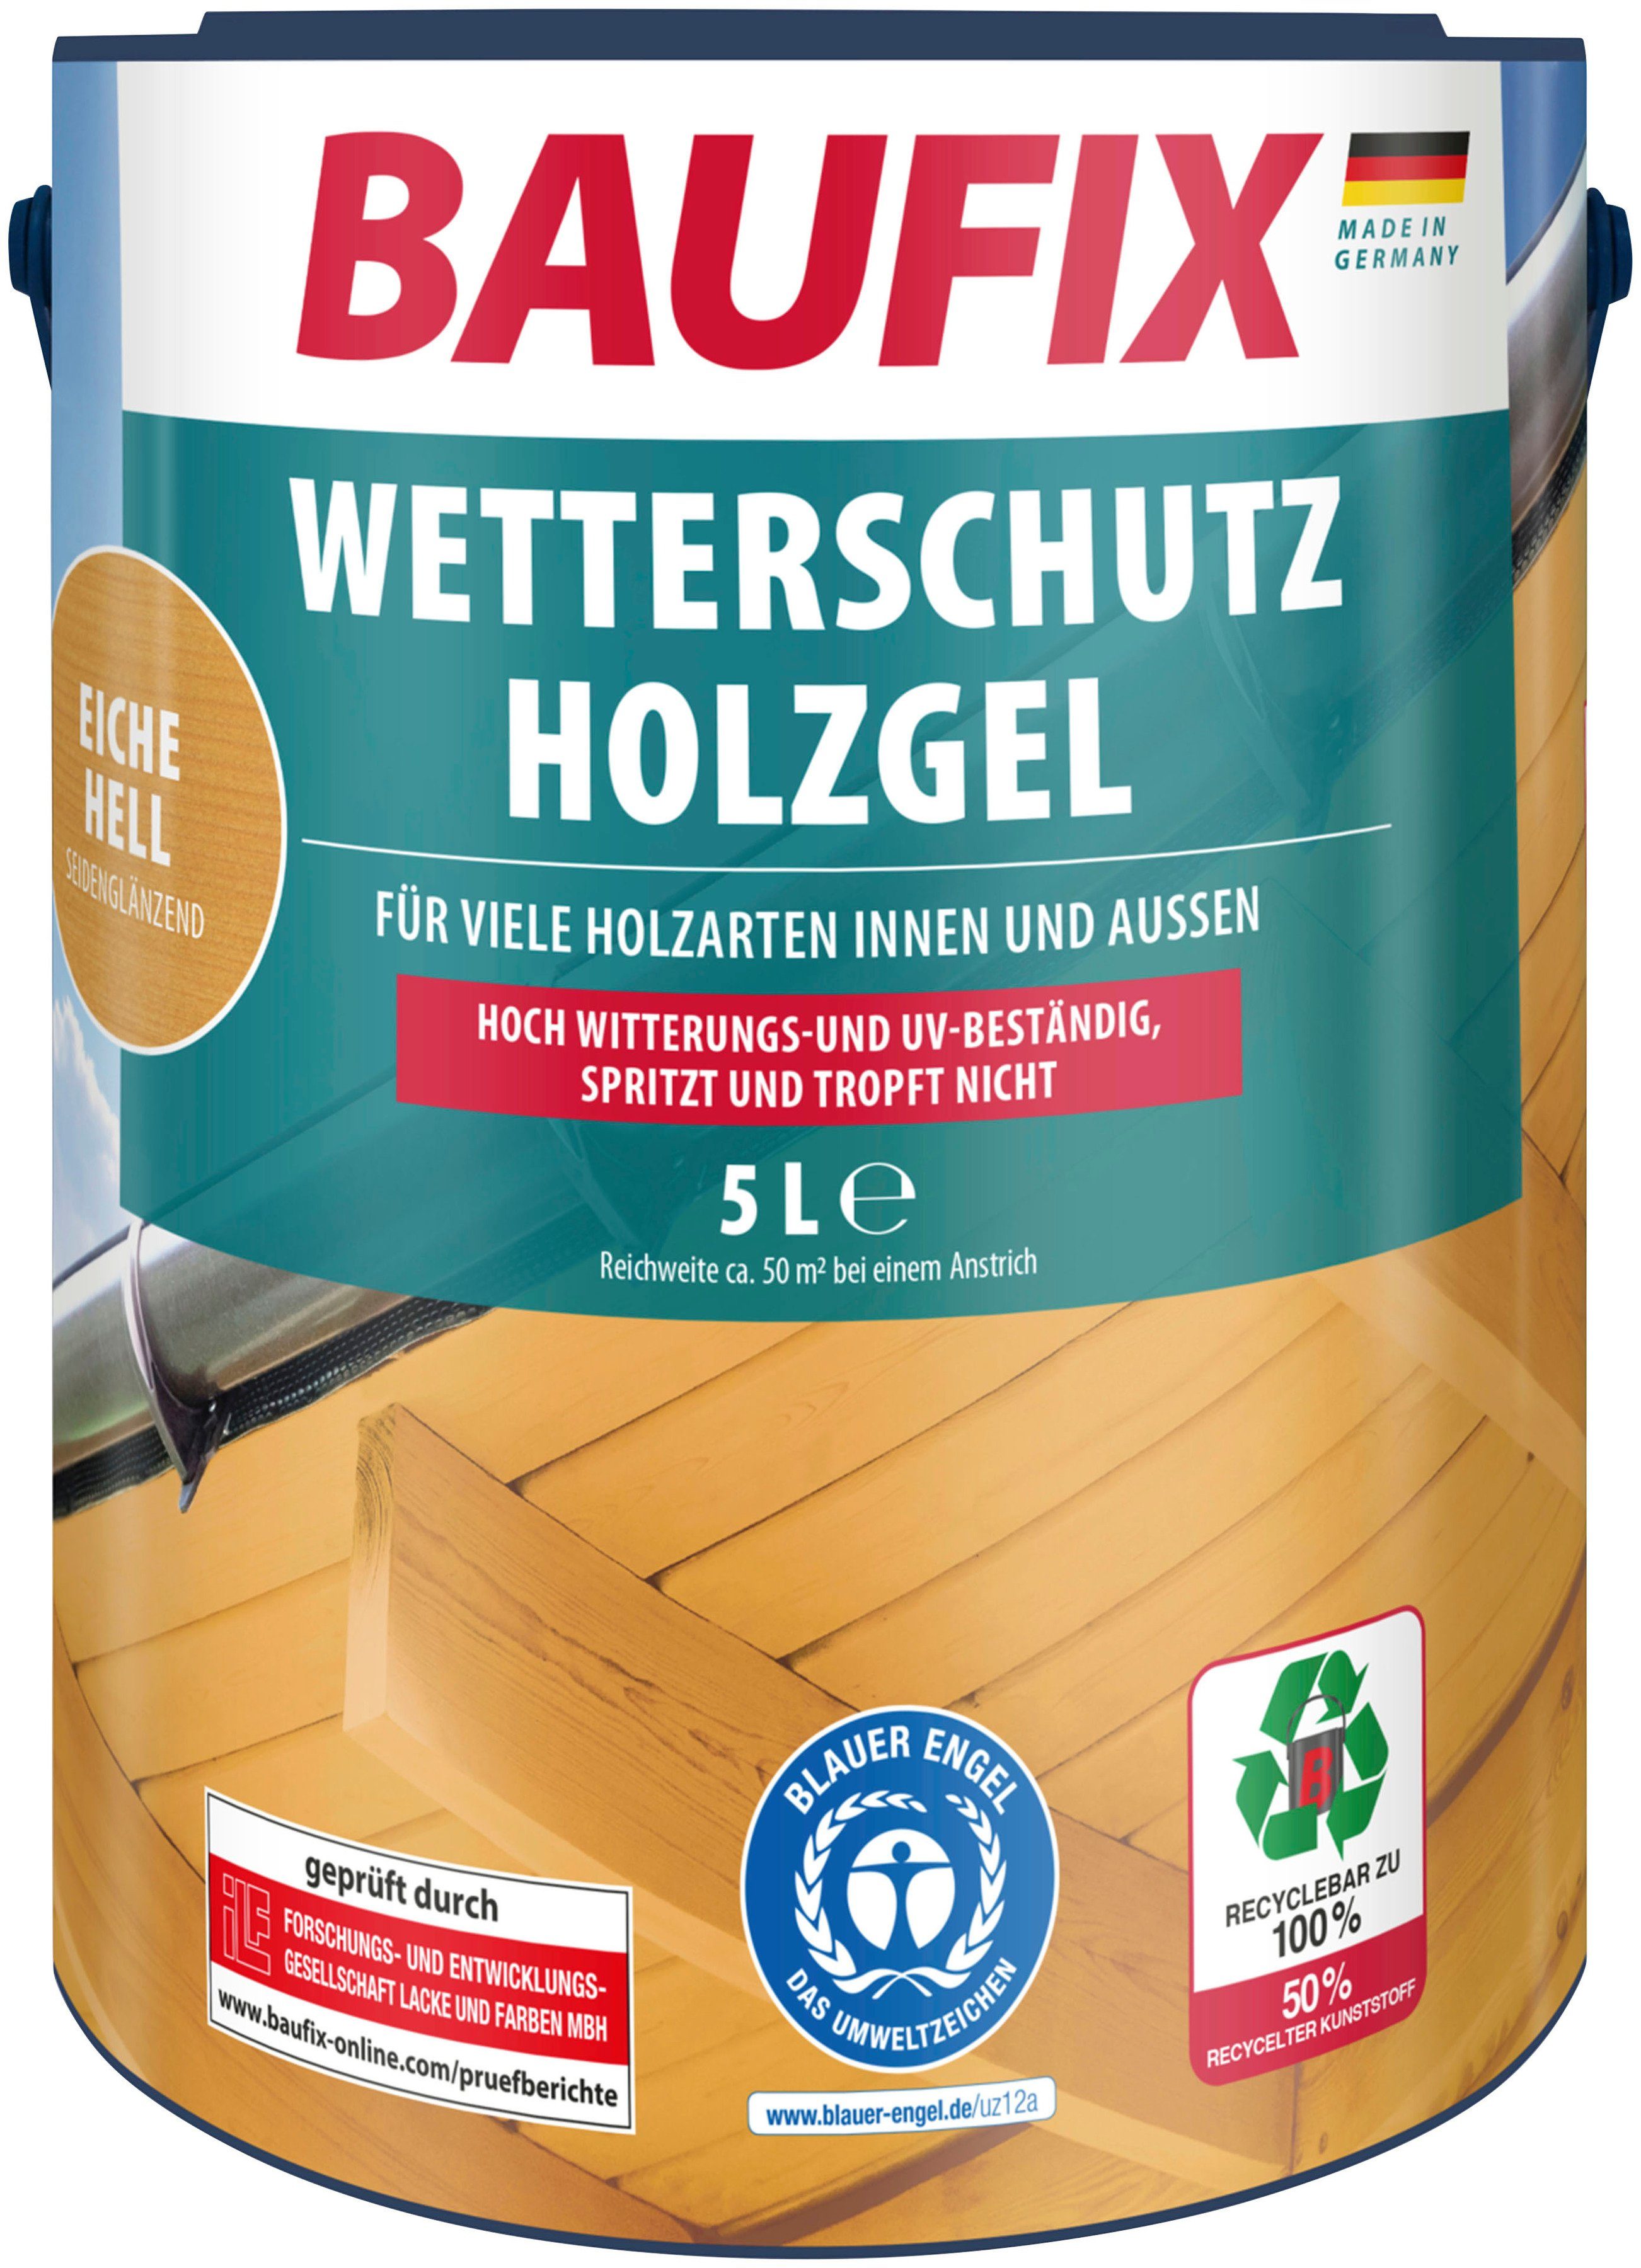 Baufix Holzschutzlasur Wetterschutz-Holzgel, wetterbeständig, UV beständig, atmungsaktiv, 5L, seidenglänzend eiche hell